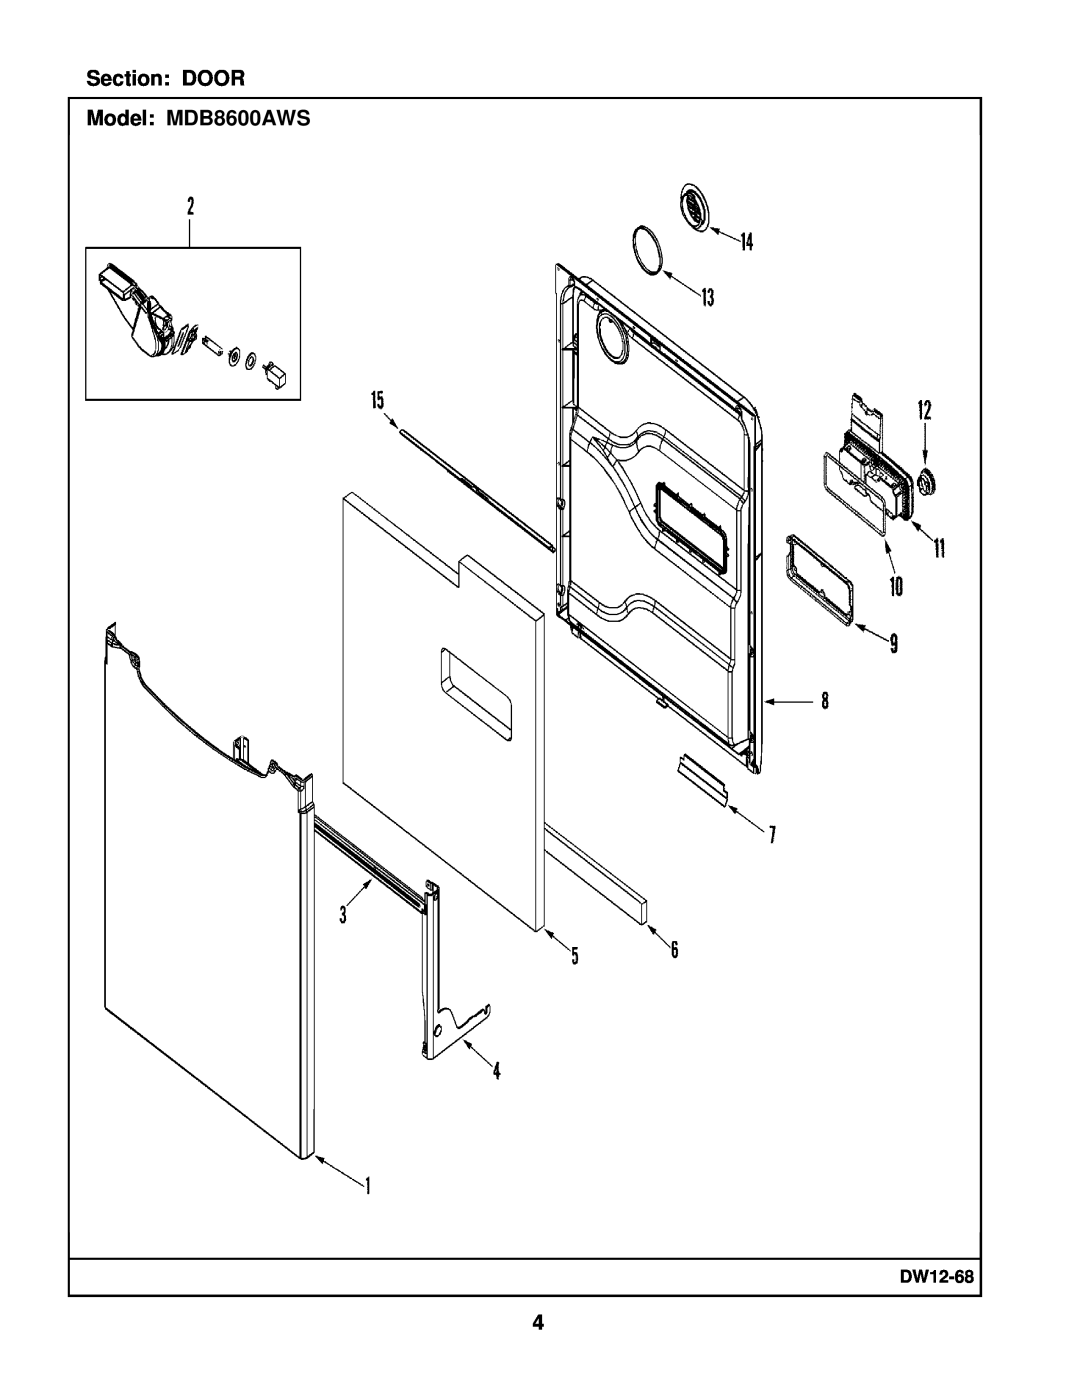 Maytag manual Section DOOR Model MDB8600AWS, DW12-68 